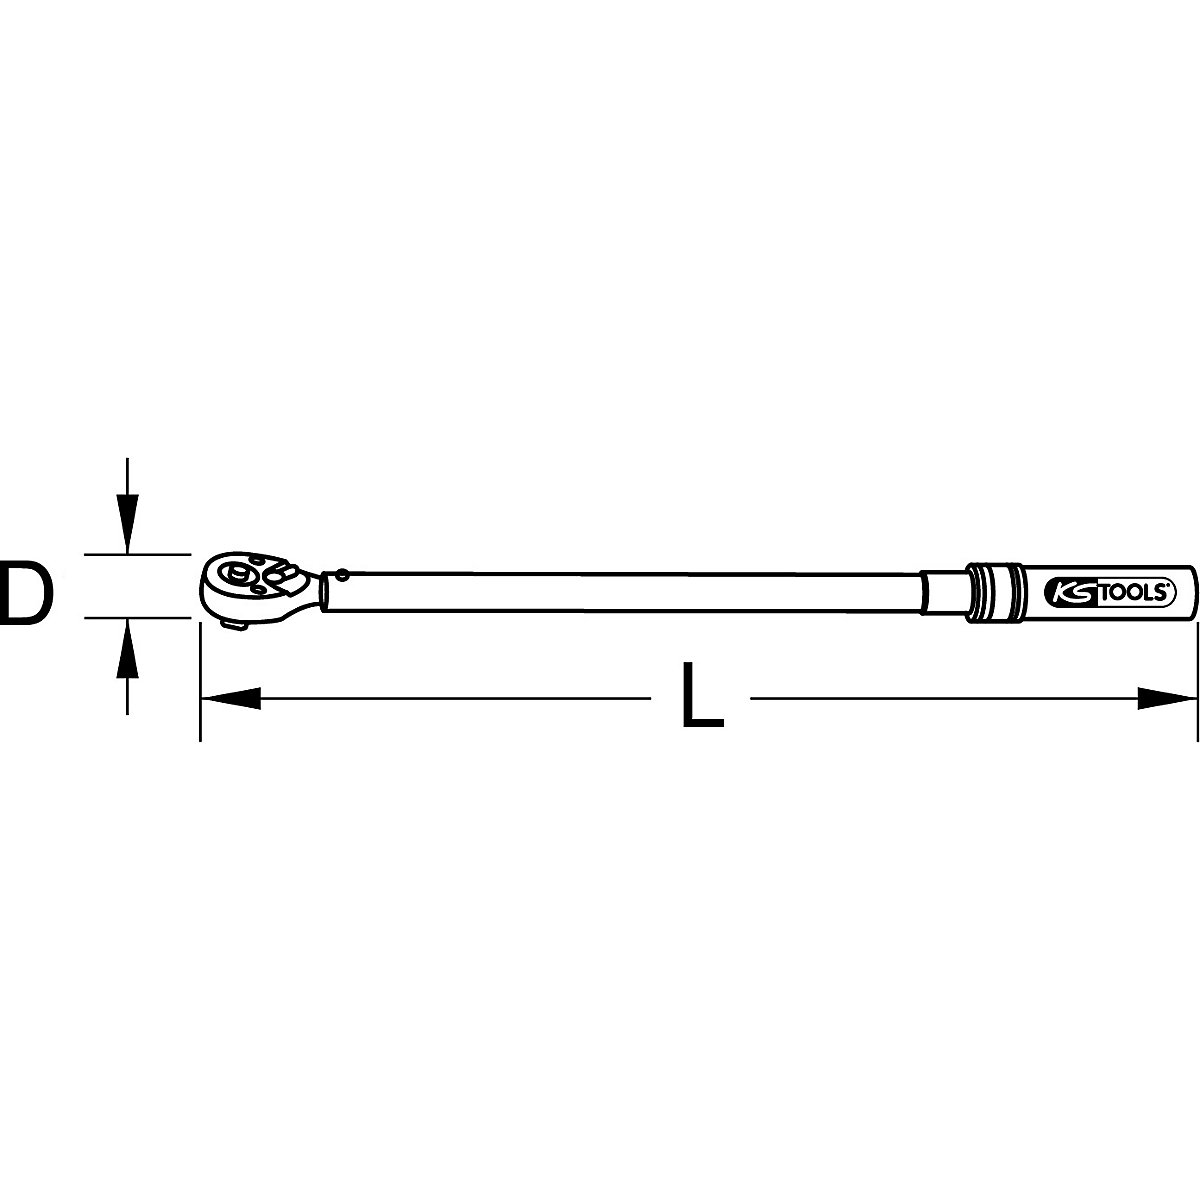 Industrijski momentni ključ, preklopna izvedba – KS Tools (Slika izdelka 8)-7